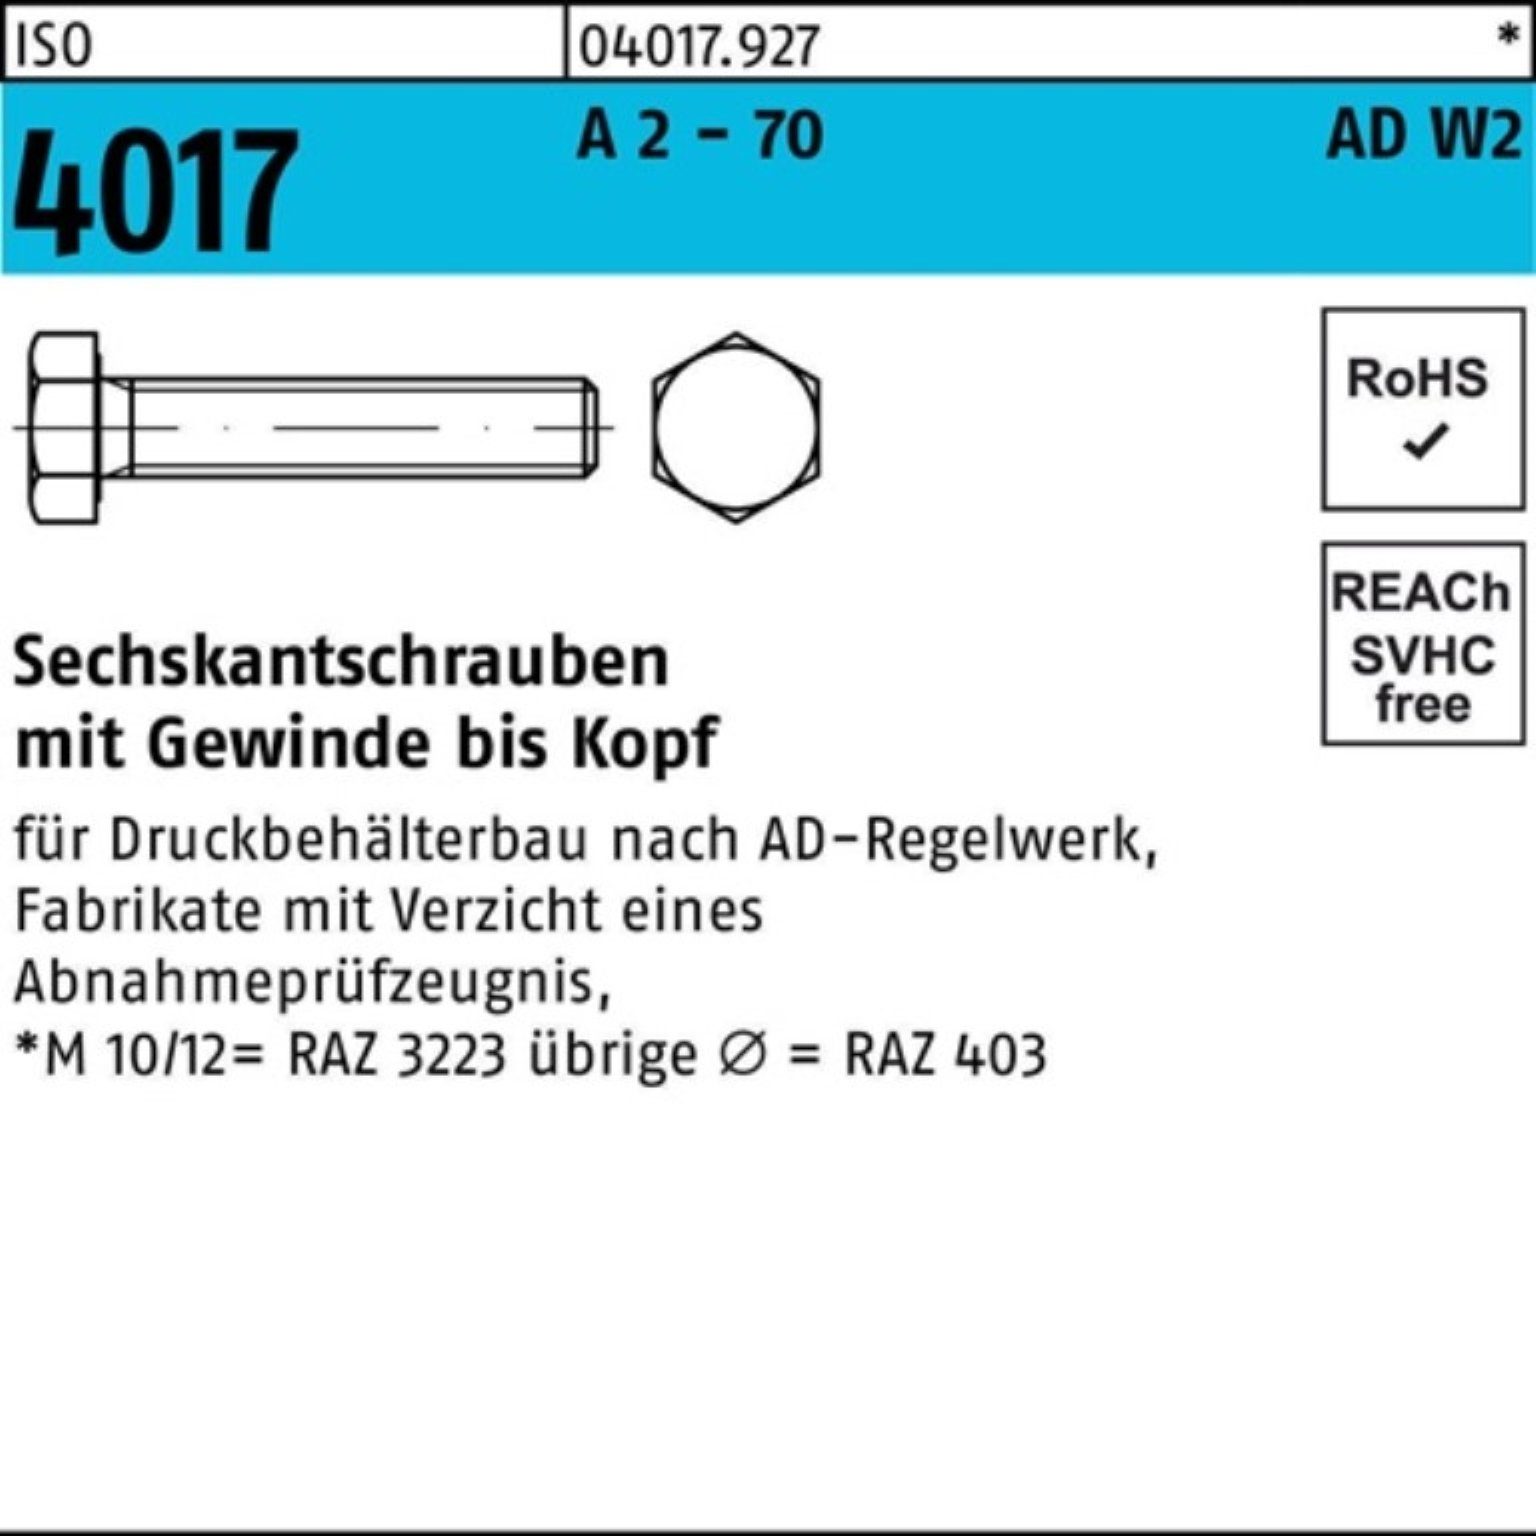 Bufab Sechskantschraube 100er Pack Sechskantschraube ISO 4017 VG M20x 80 A 2 - 70 AD-W2 25 St